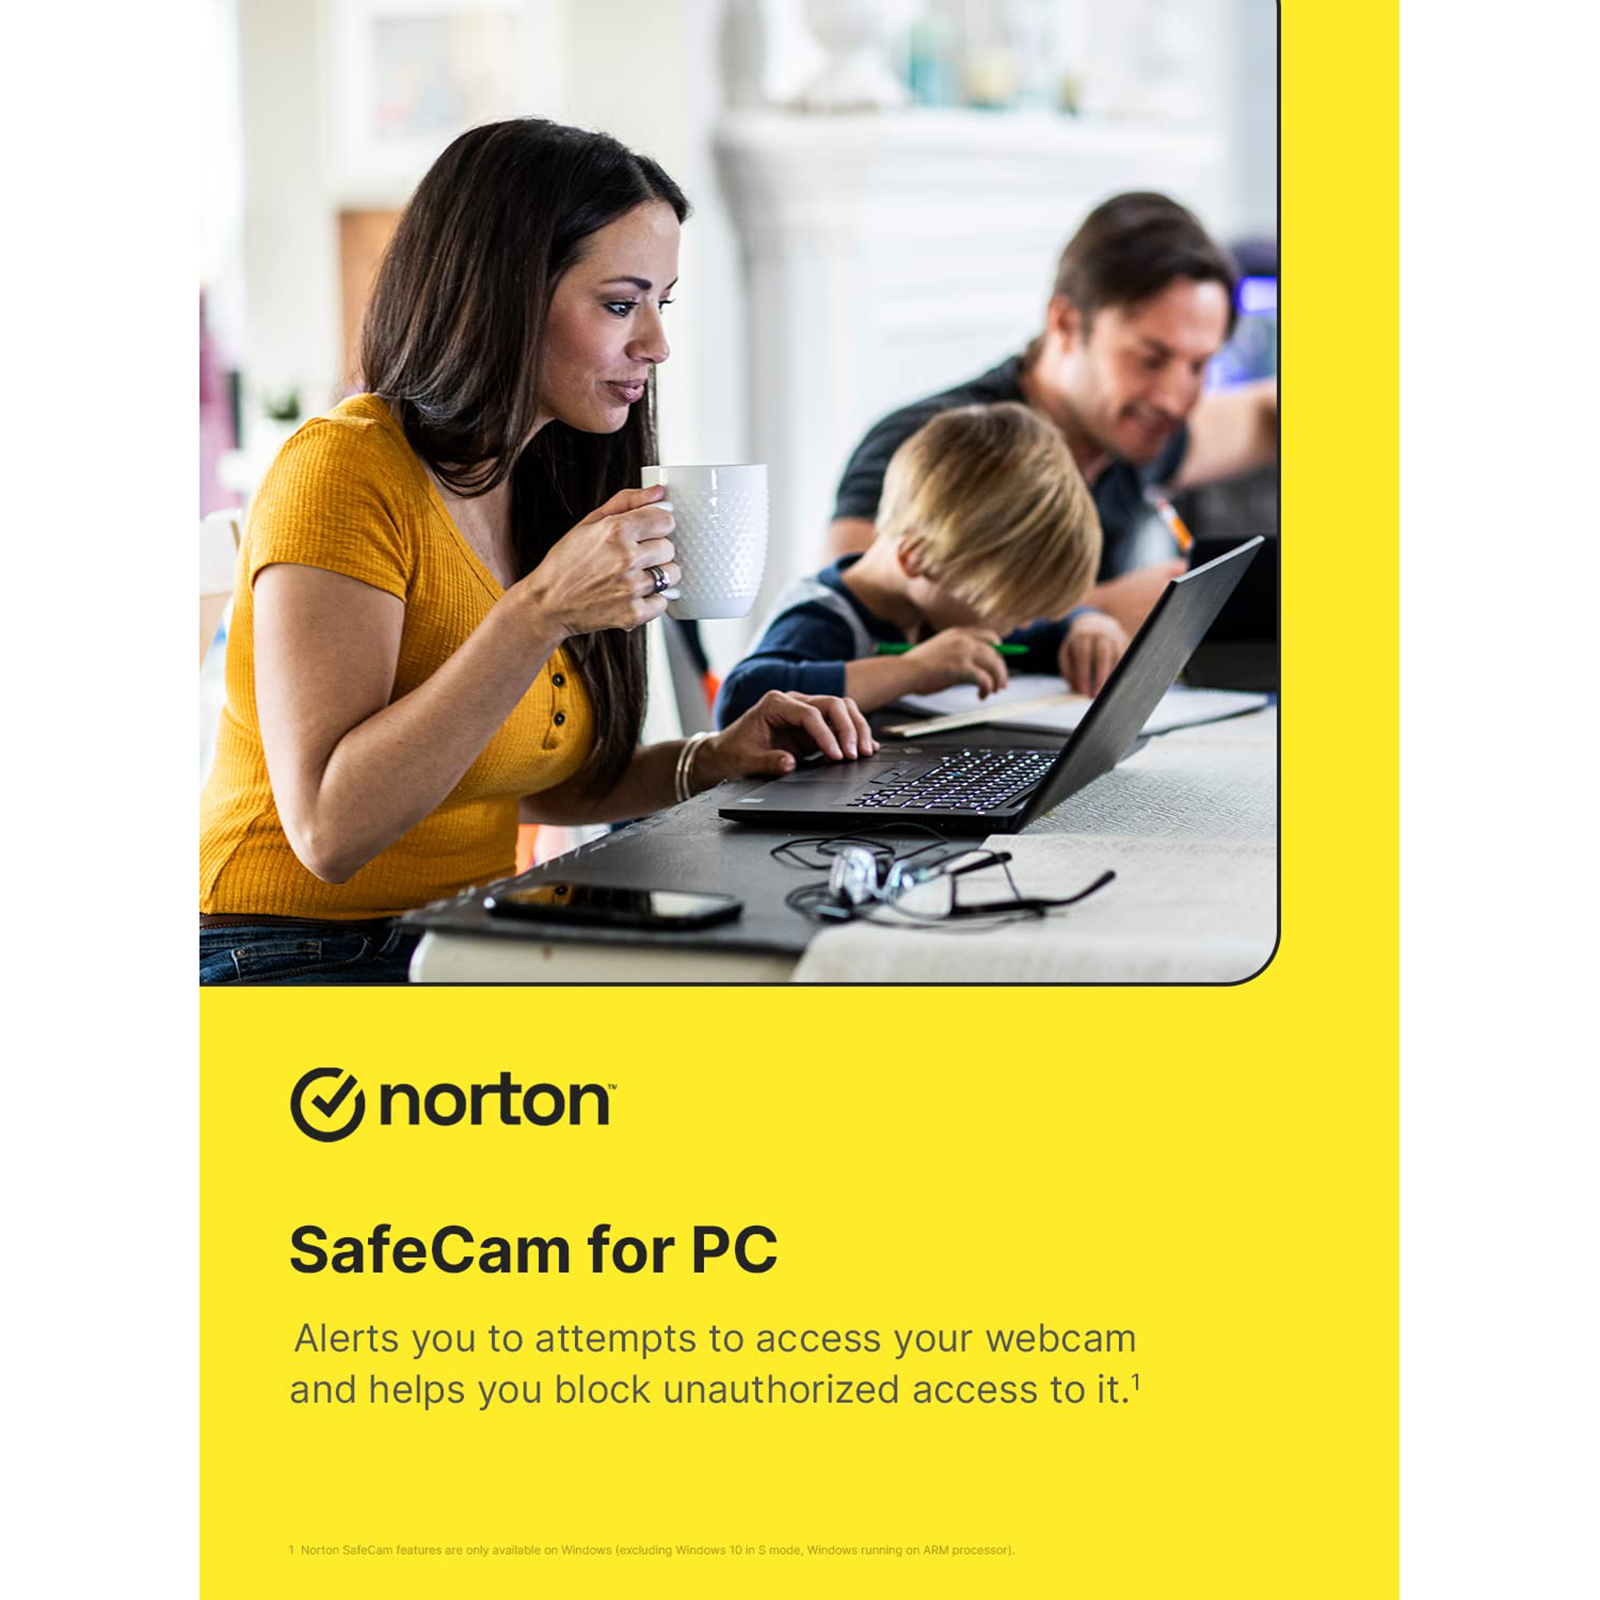 Buy Norton Antivirus Plus (1 Device, 1 Year) Online - Croma